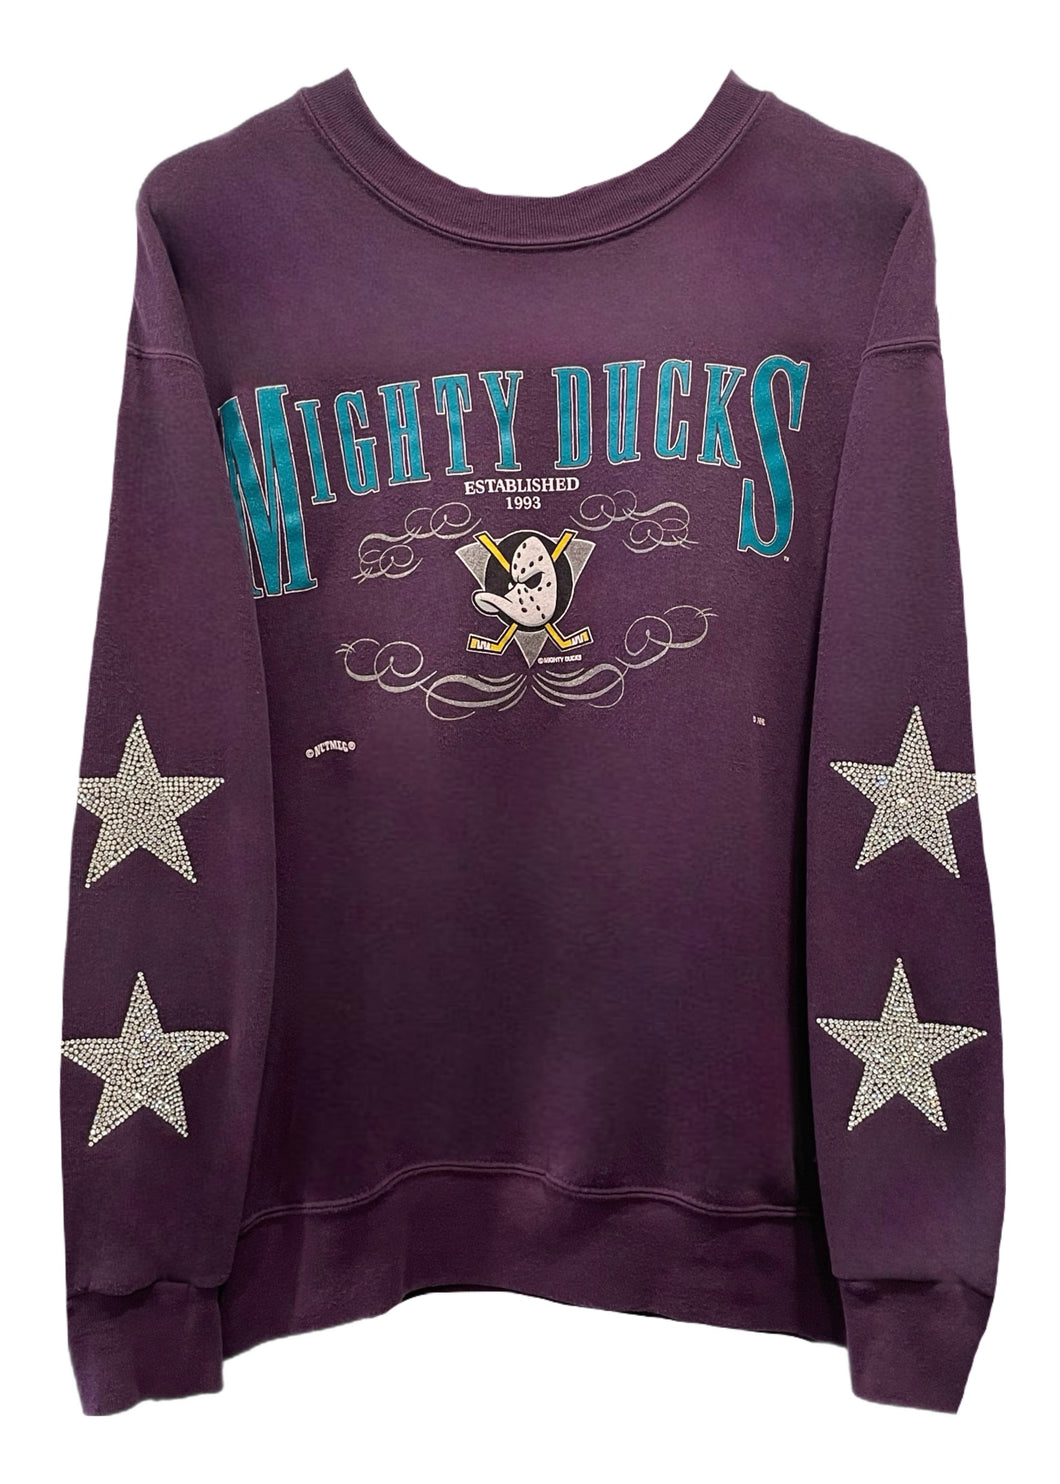 Anaheim Ducks, NHL One of a KIND Vintage “Mighty Ducks” Sweatshirt with Crystal Star Design -Size: Medium